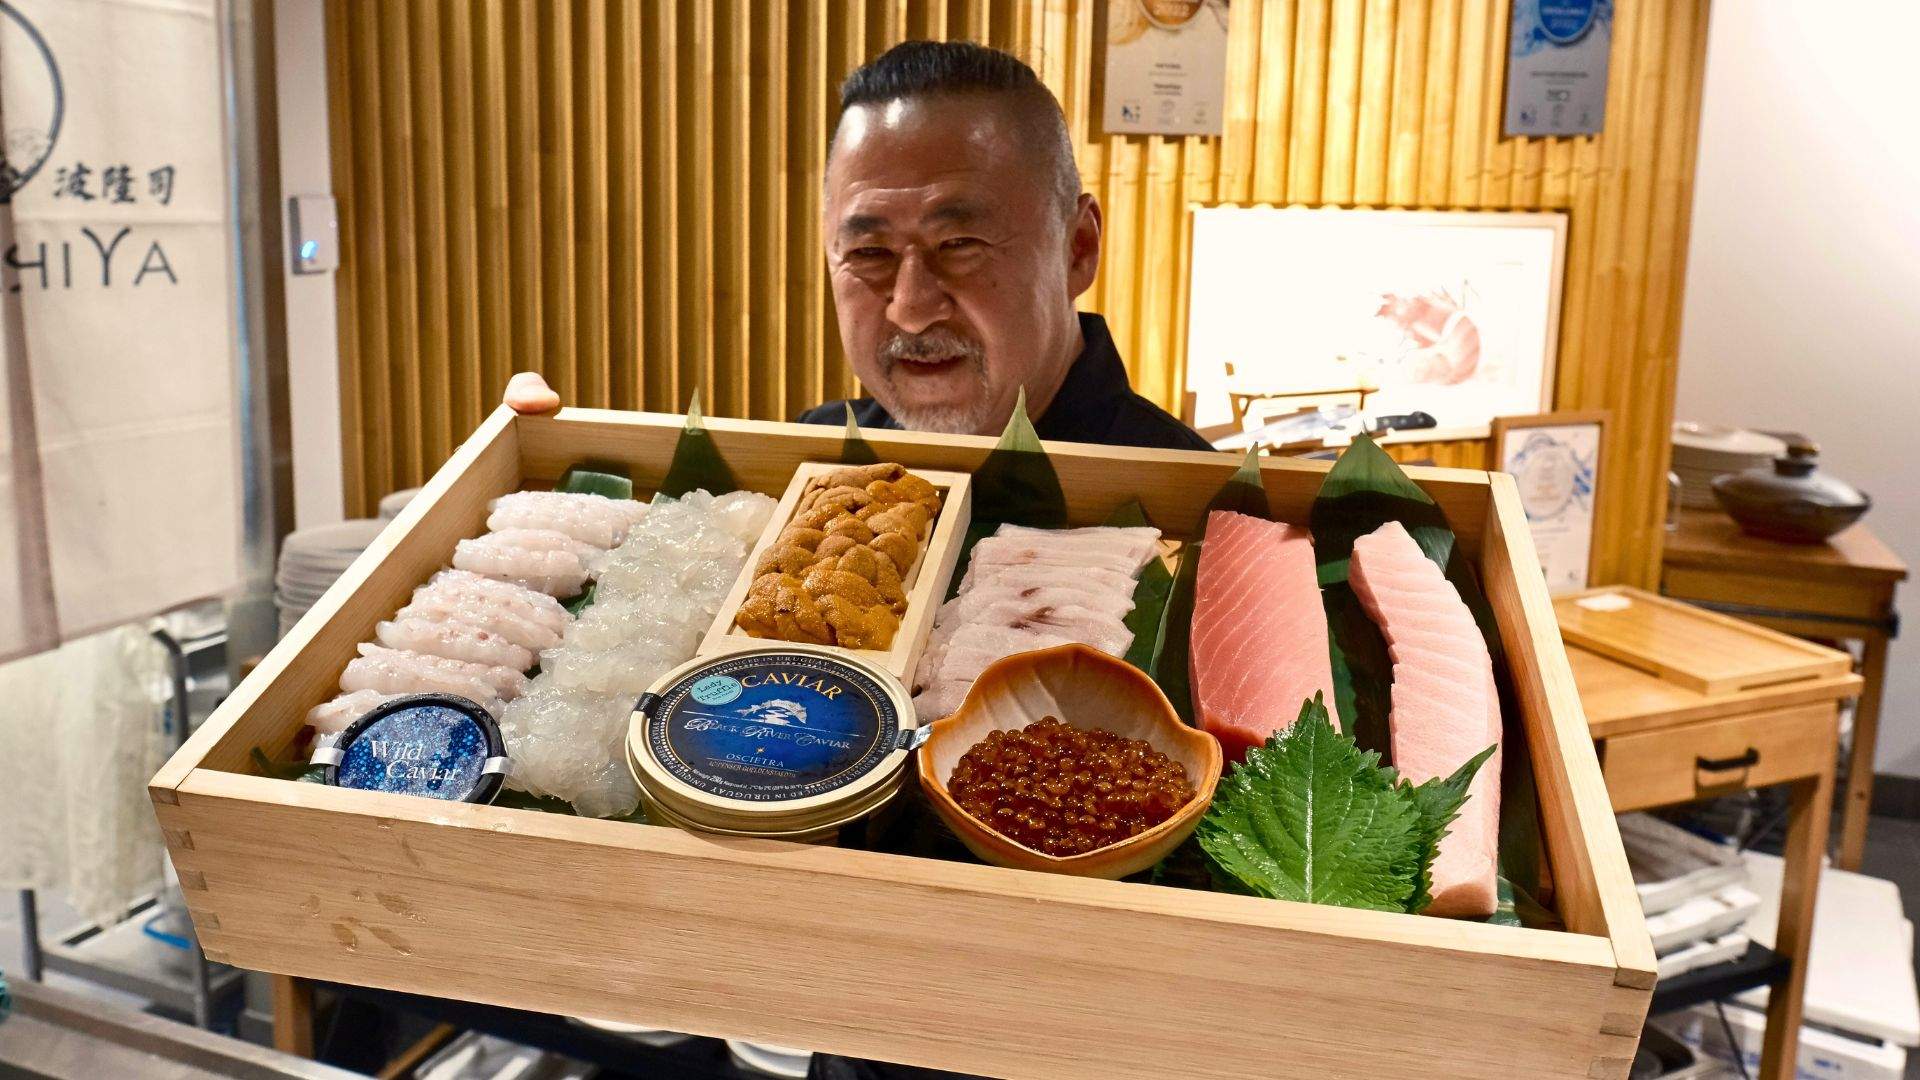 Chef Takashi Nami showing a platter of Japanese eats at Takashiya - one of the best Japanese restaurants in Brisbane.